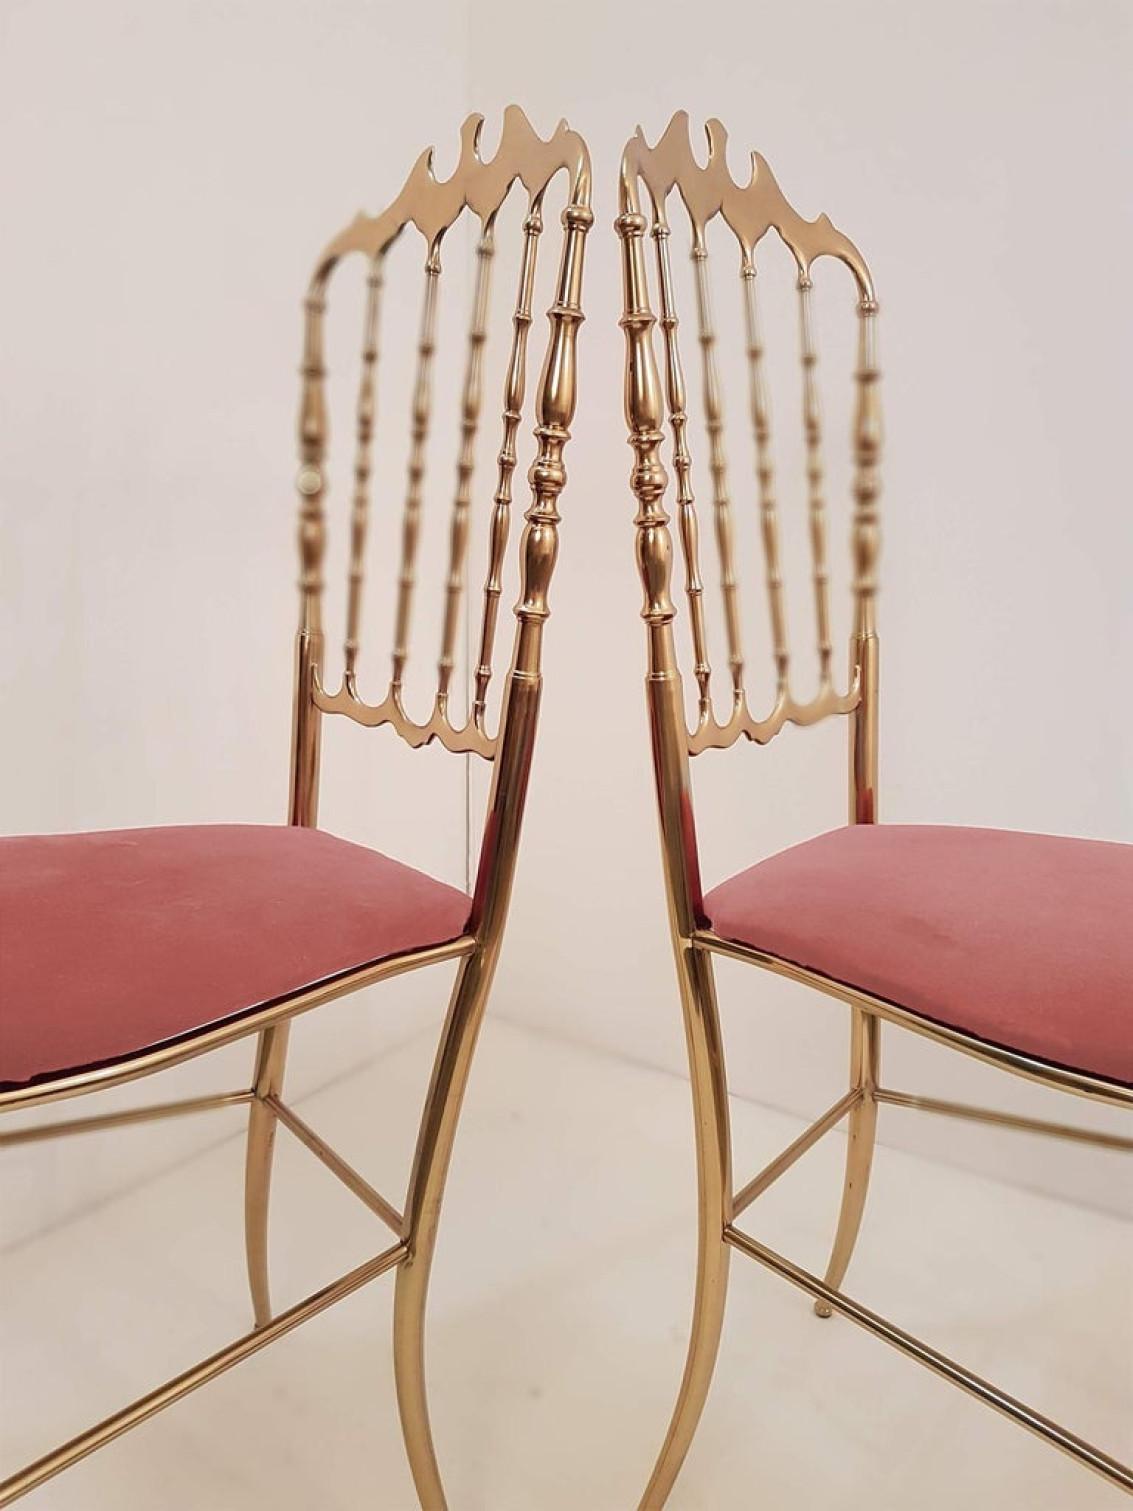 Other Pair of Italian Massive Brass Chairs by Chiavari, Upholstery Pink Velvet